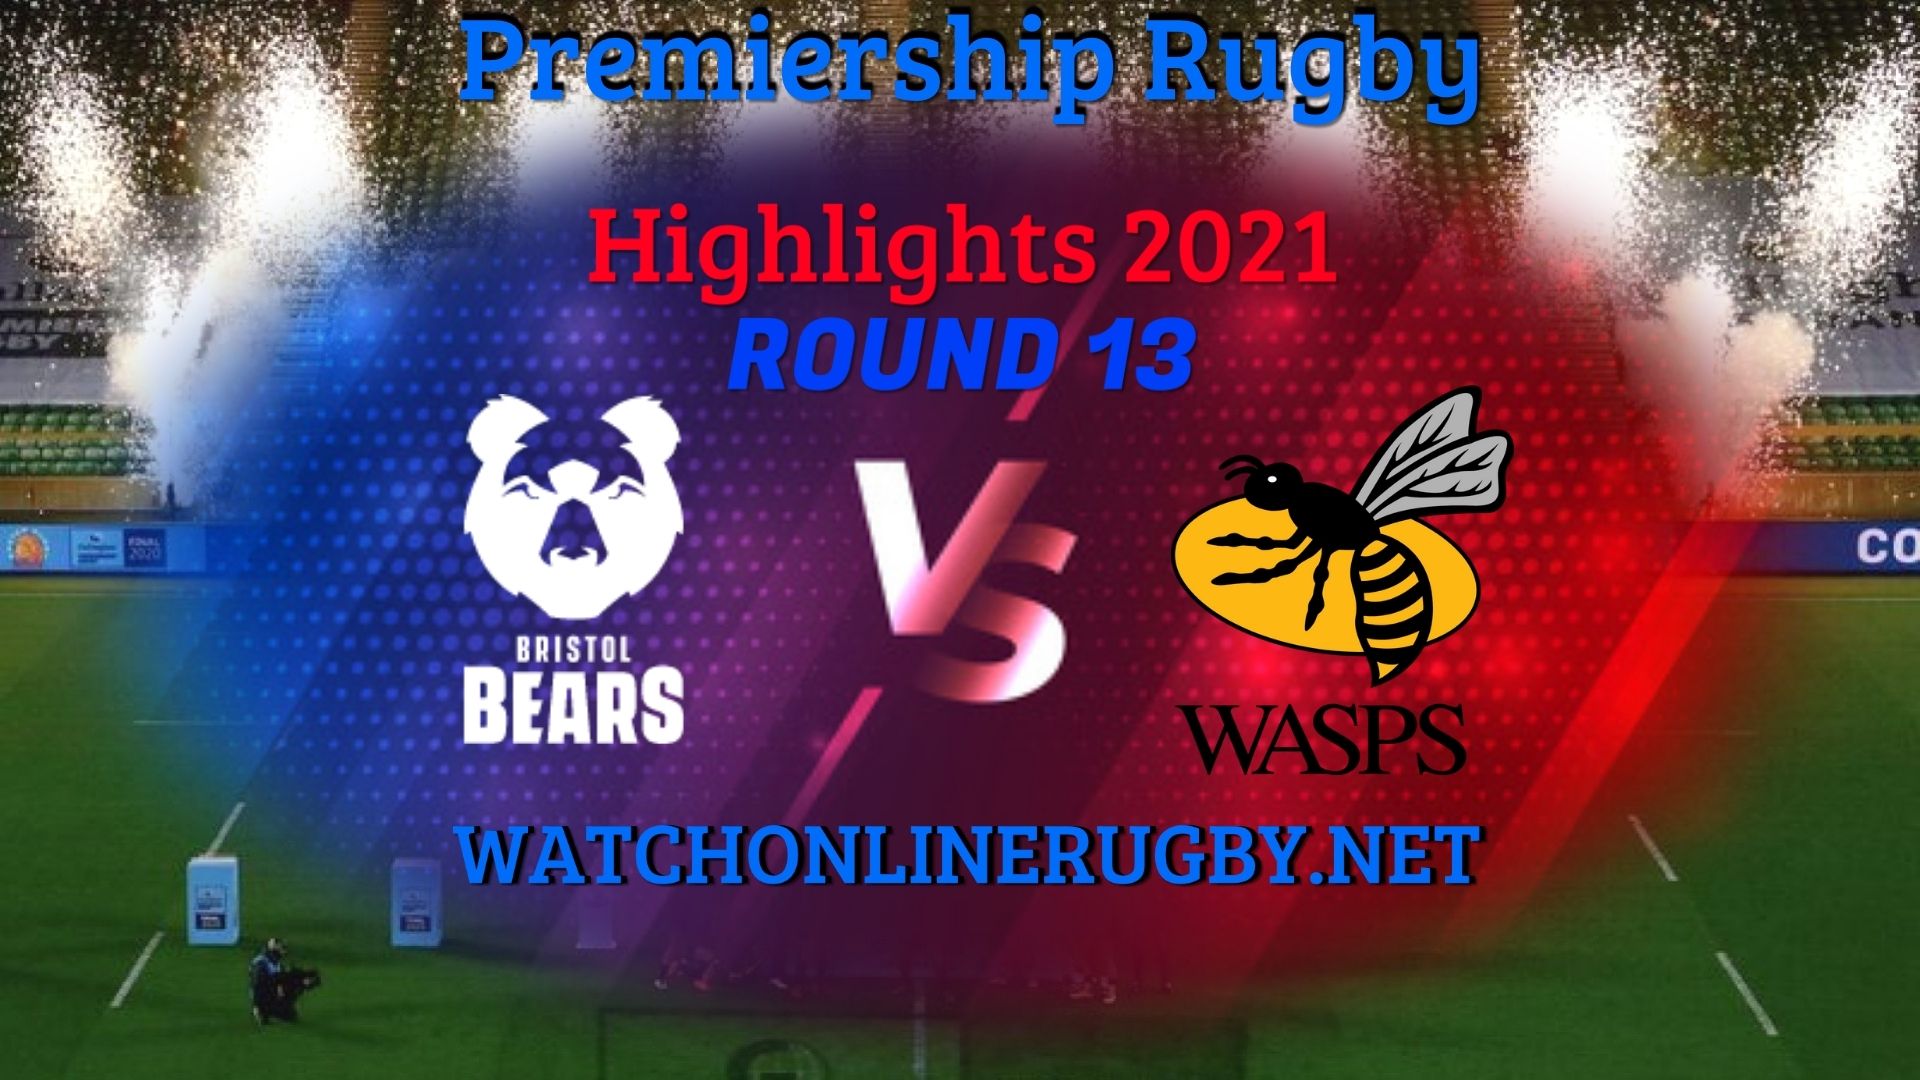 Bristol Bears Vs Wasps Premiership Rugby 2021 RD 13